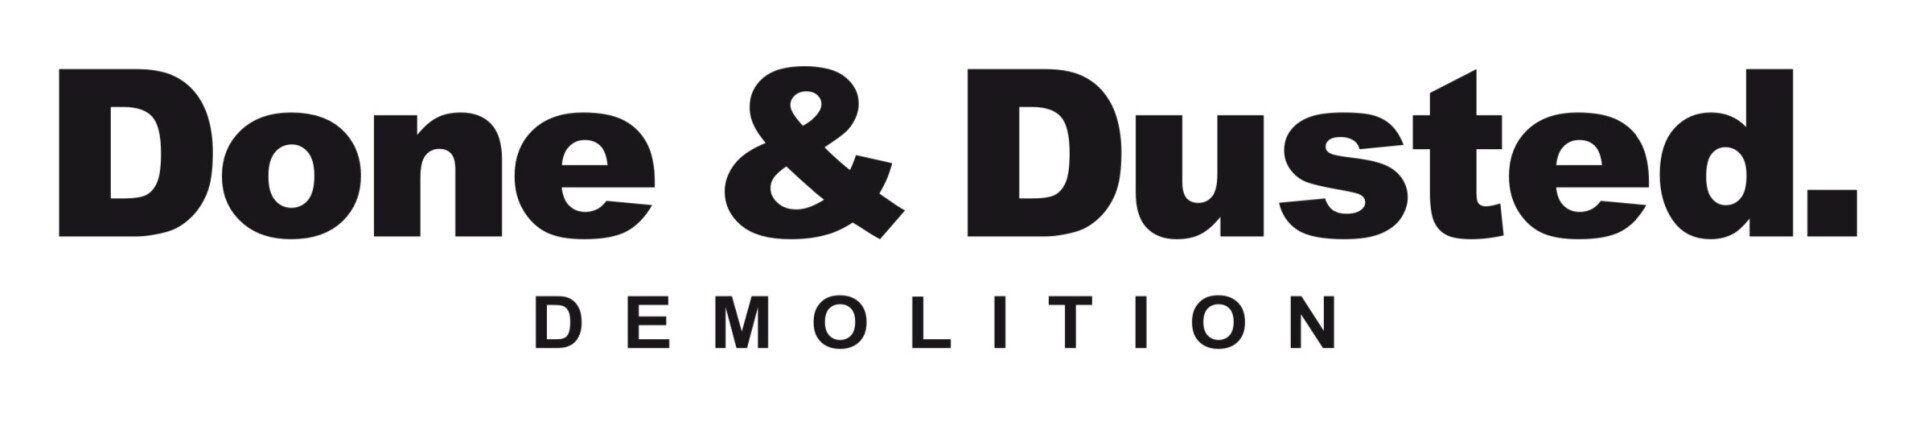 Done & Dusted Demolition: Specialist Demolition Services in Queensland